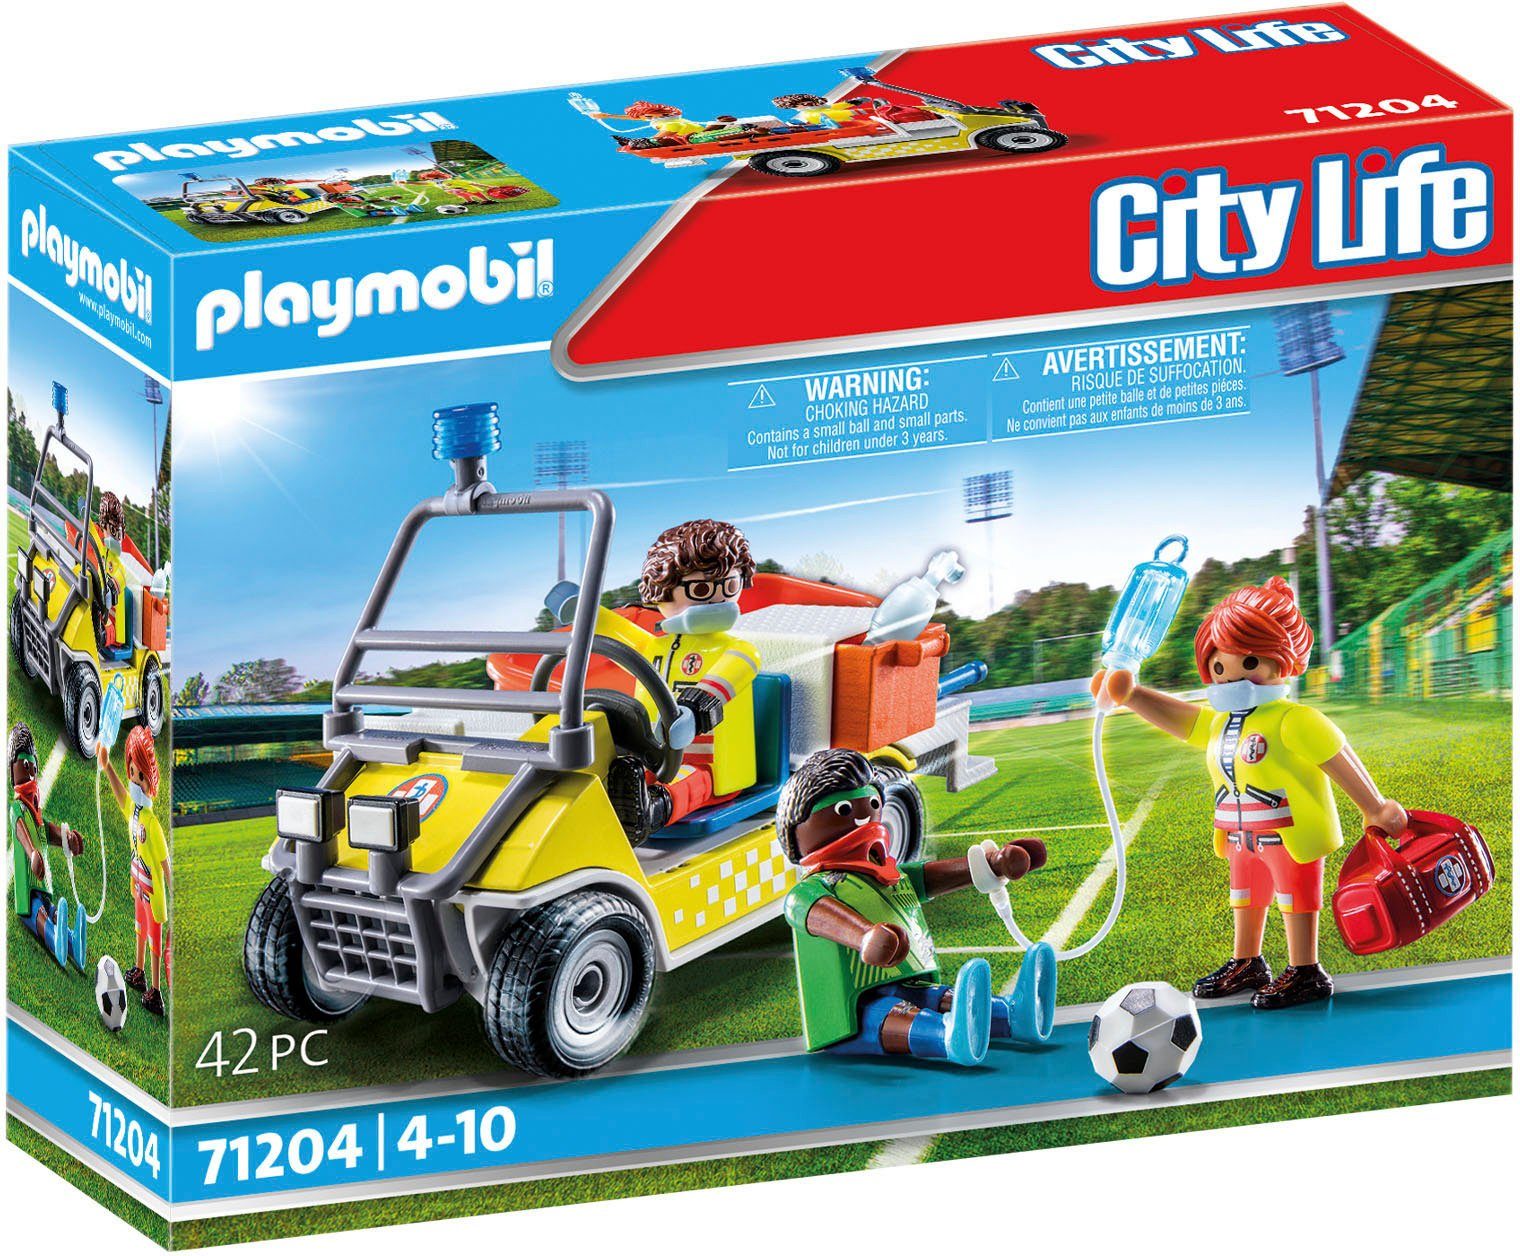 Playmobil® Konstruktions-Spielset Rettungscaddy (71204), City Life